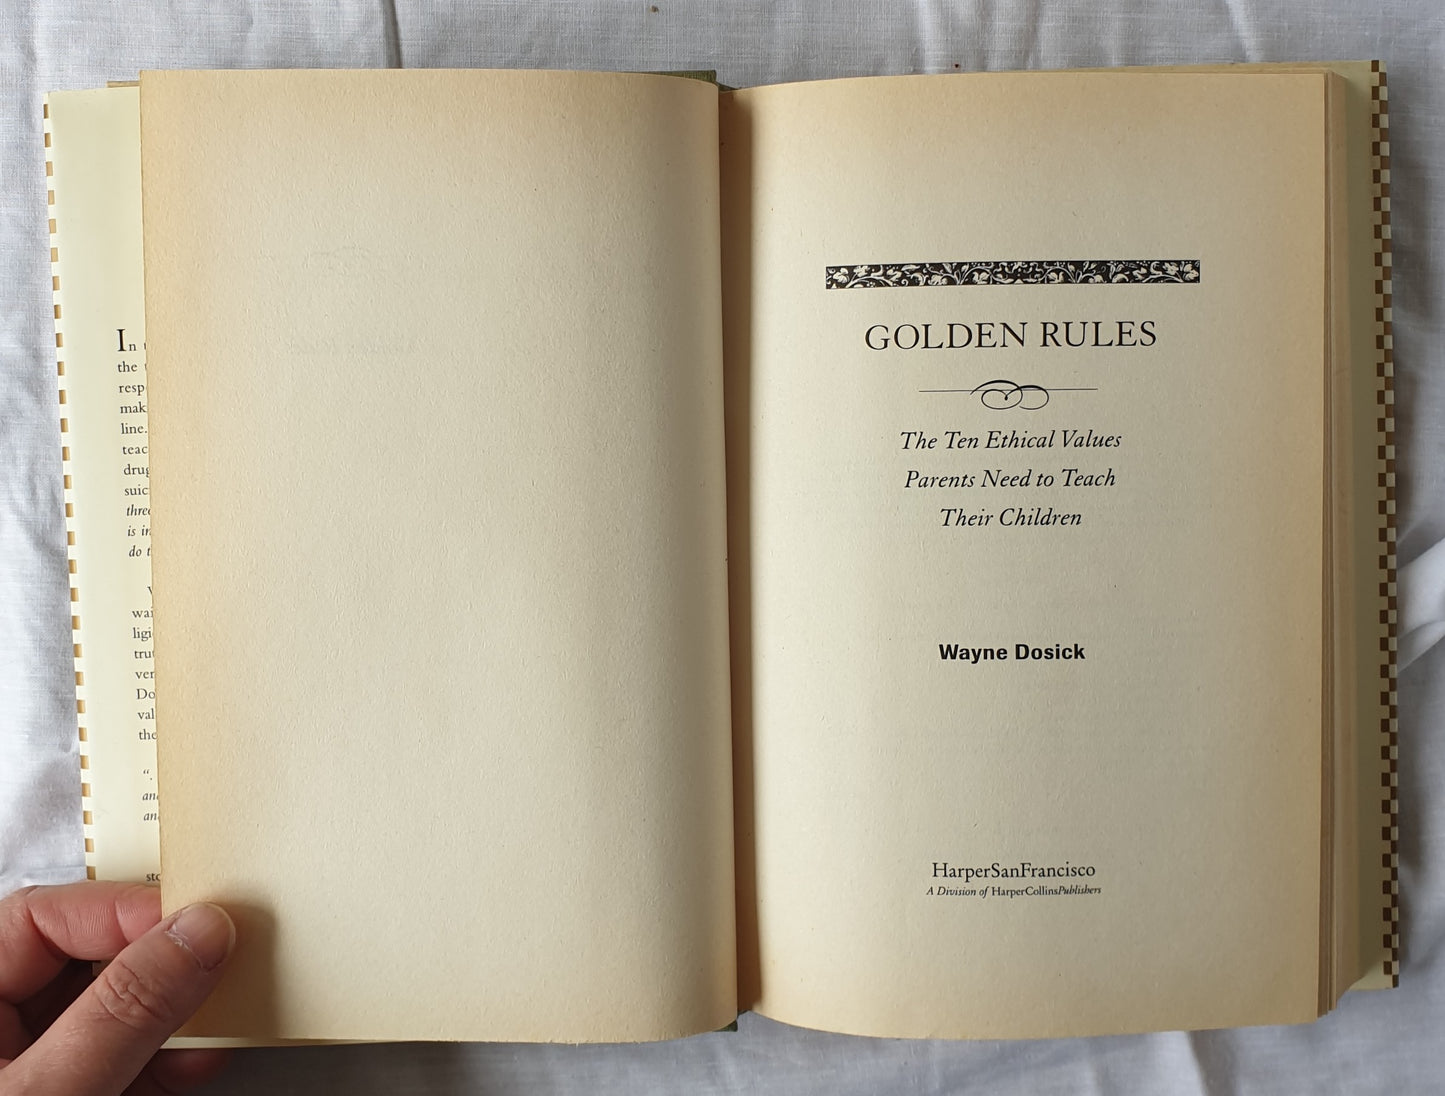 Golden Rules by Wayne Dosick